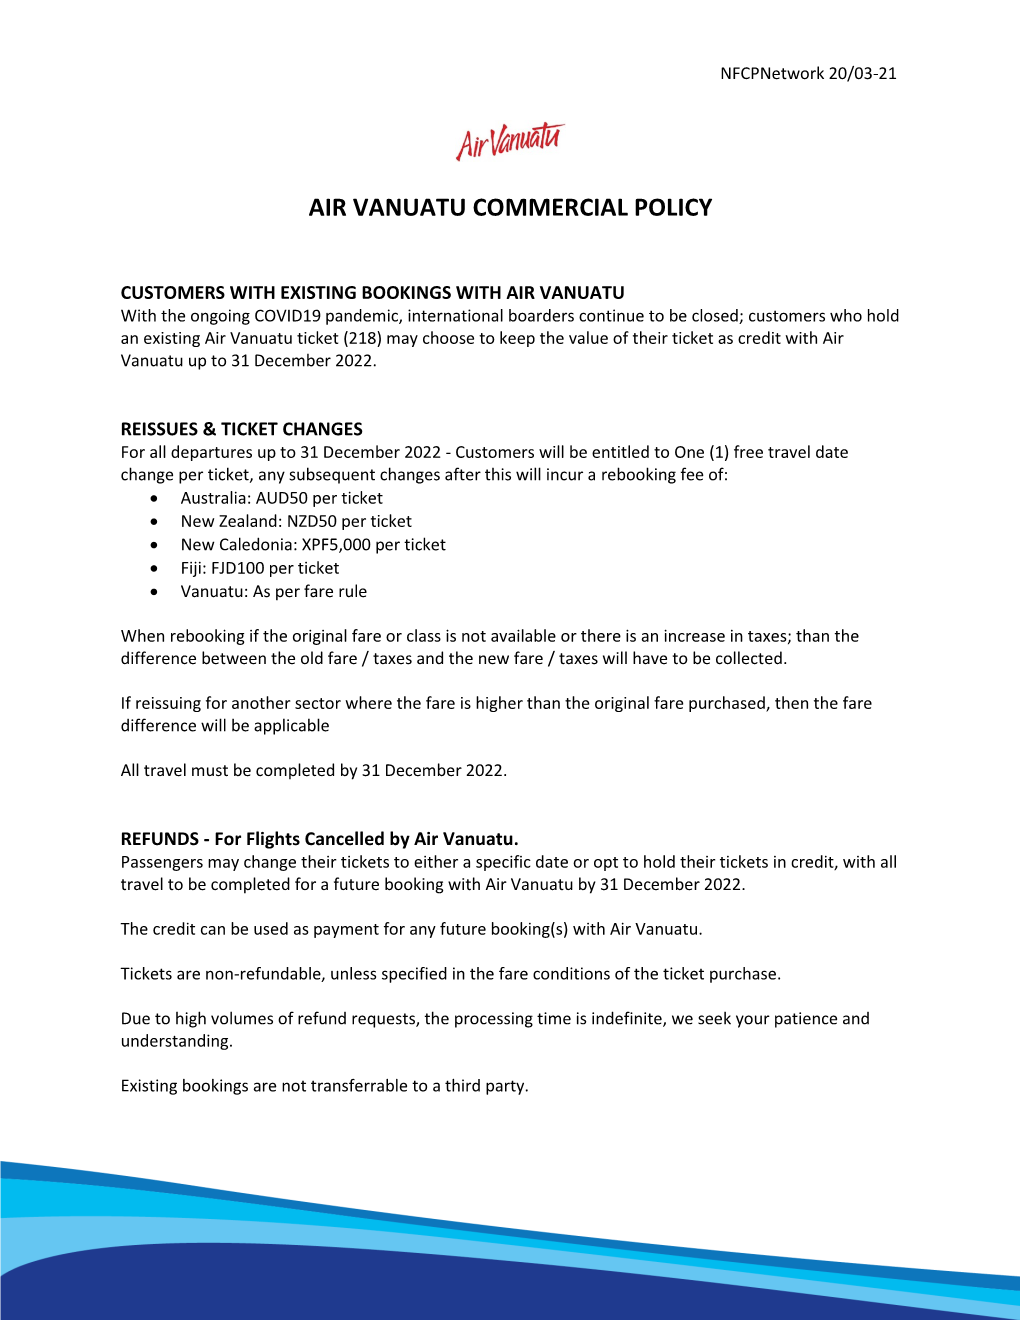 Air Vanuatu Commercial Policy